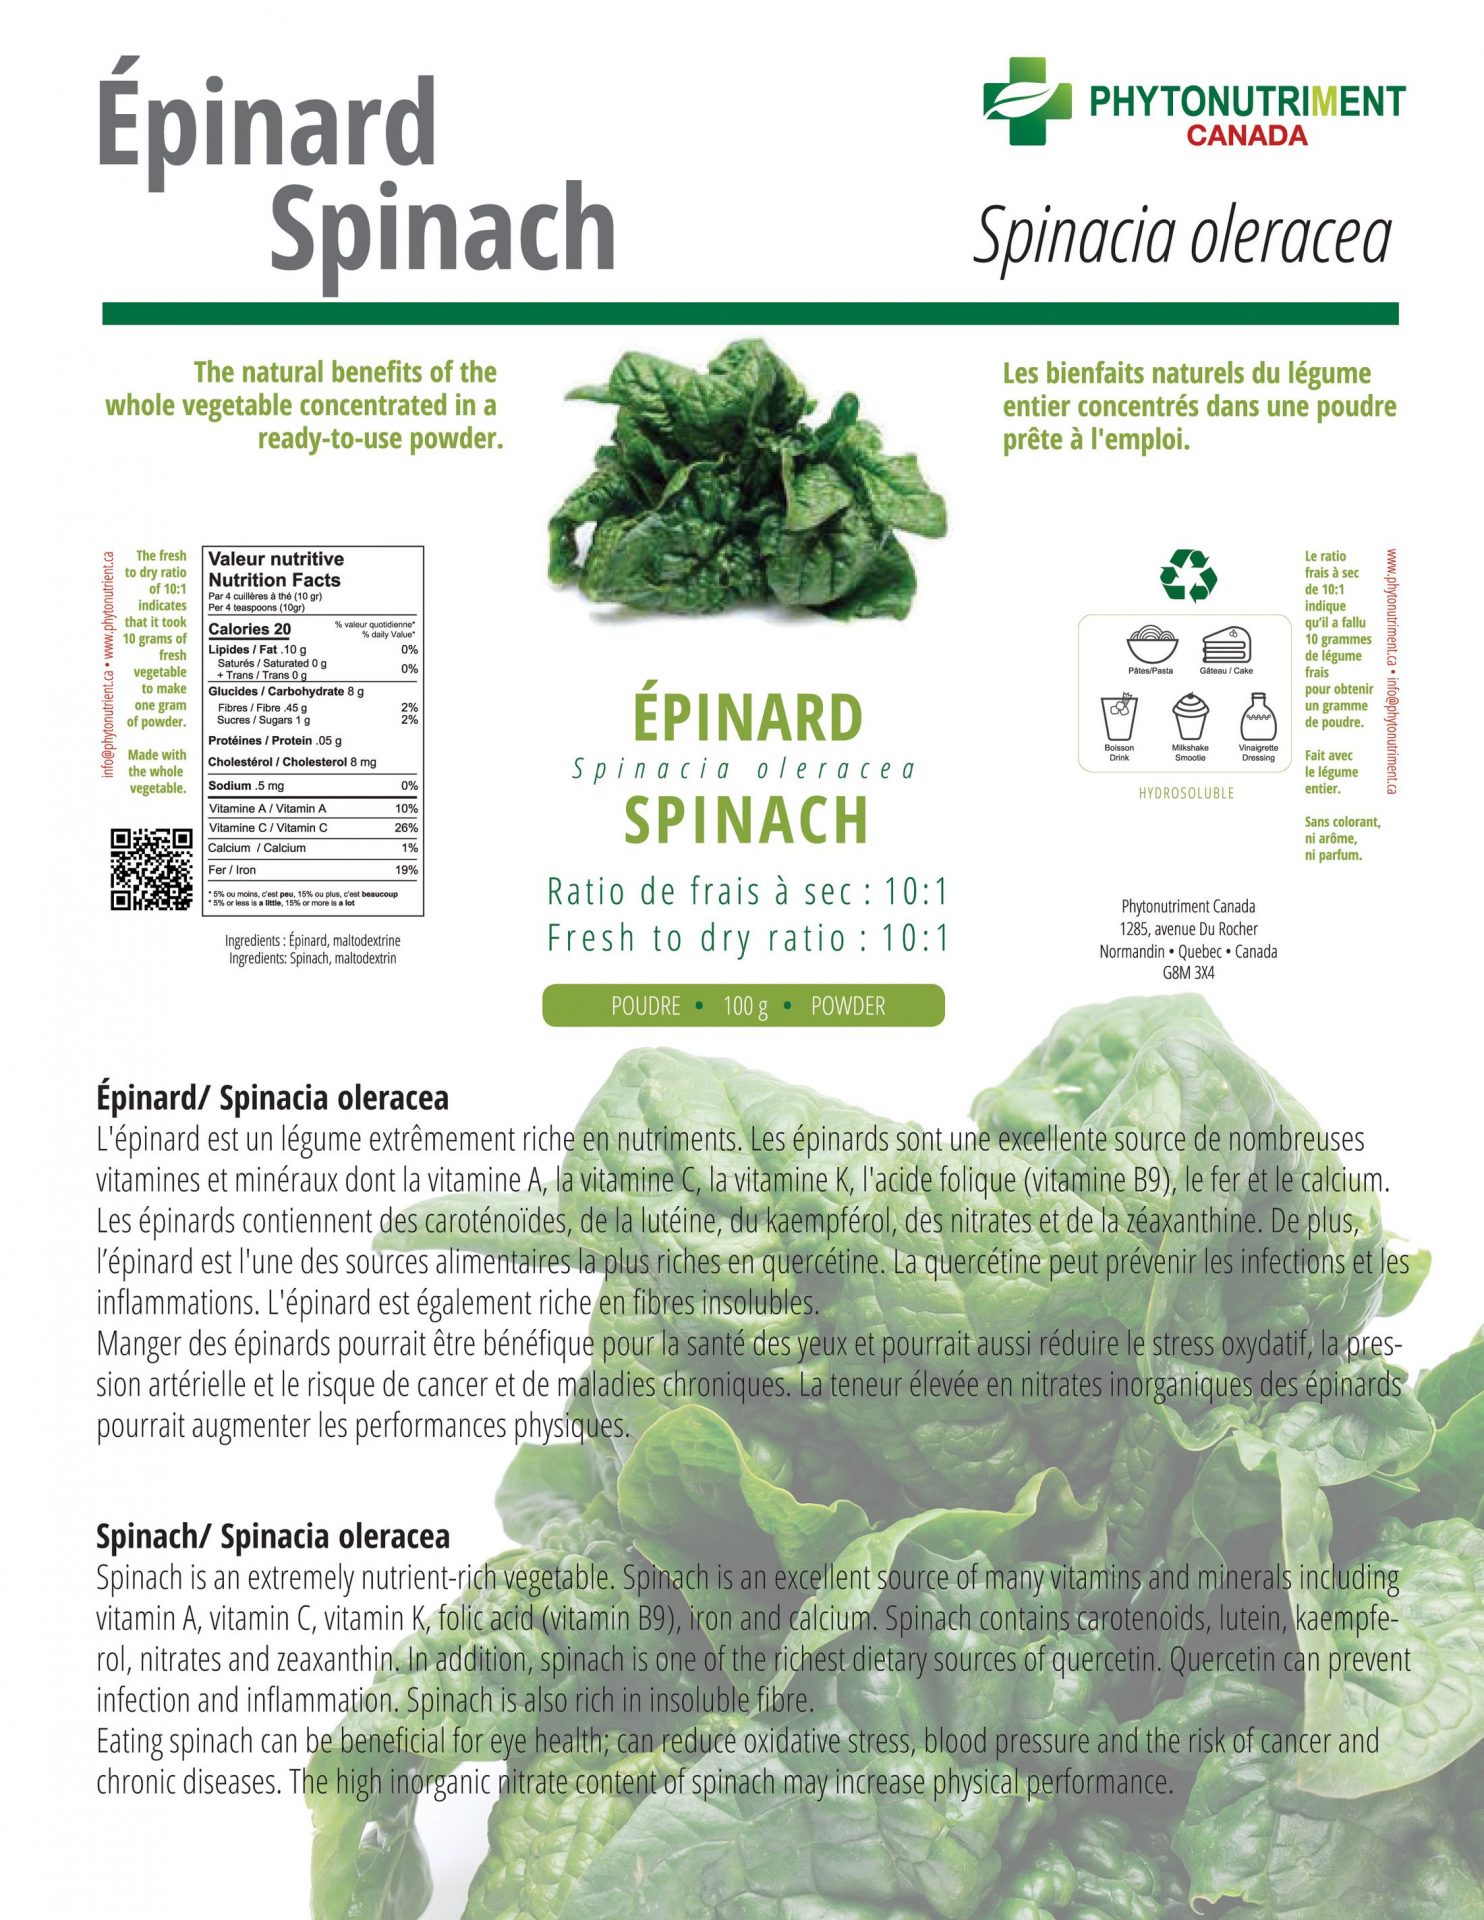 Phytonutrient Canada's Spinach Powder